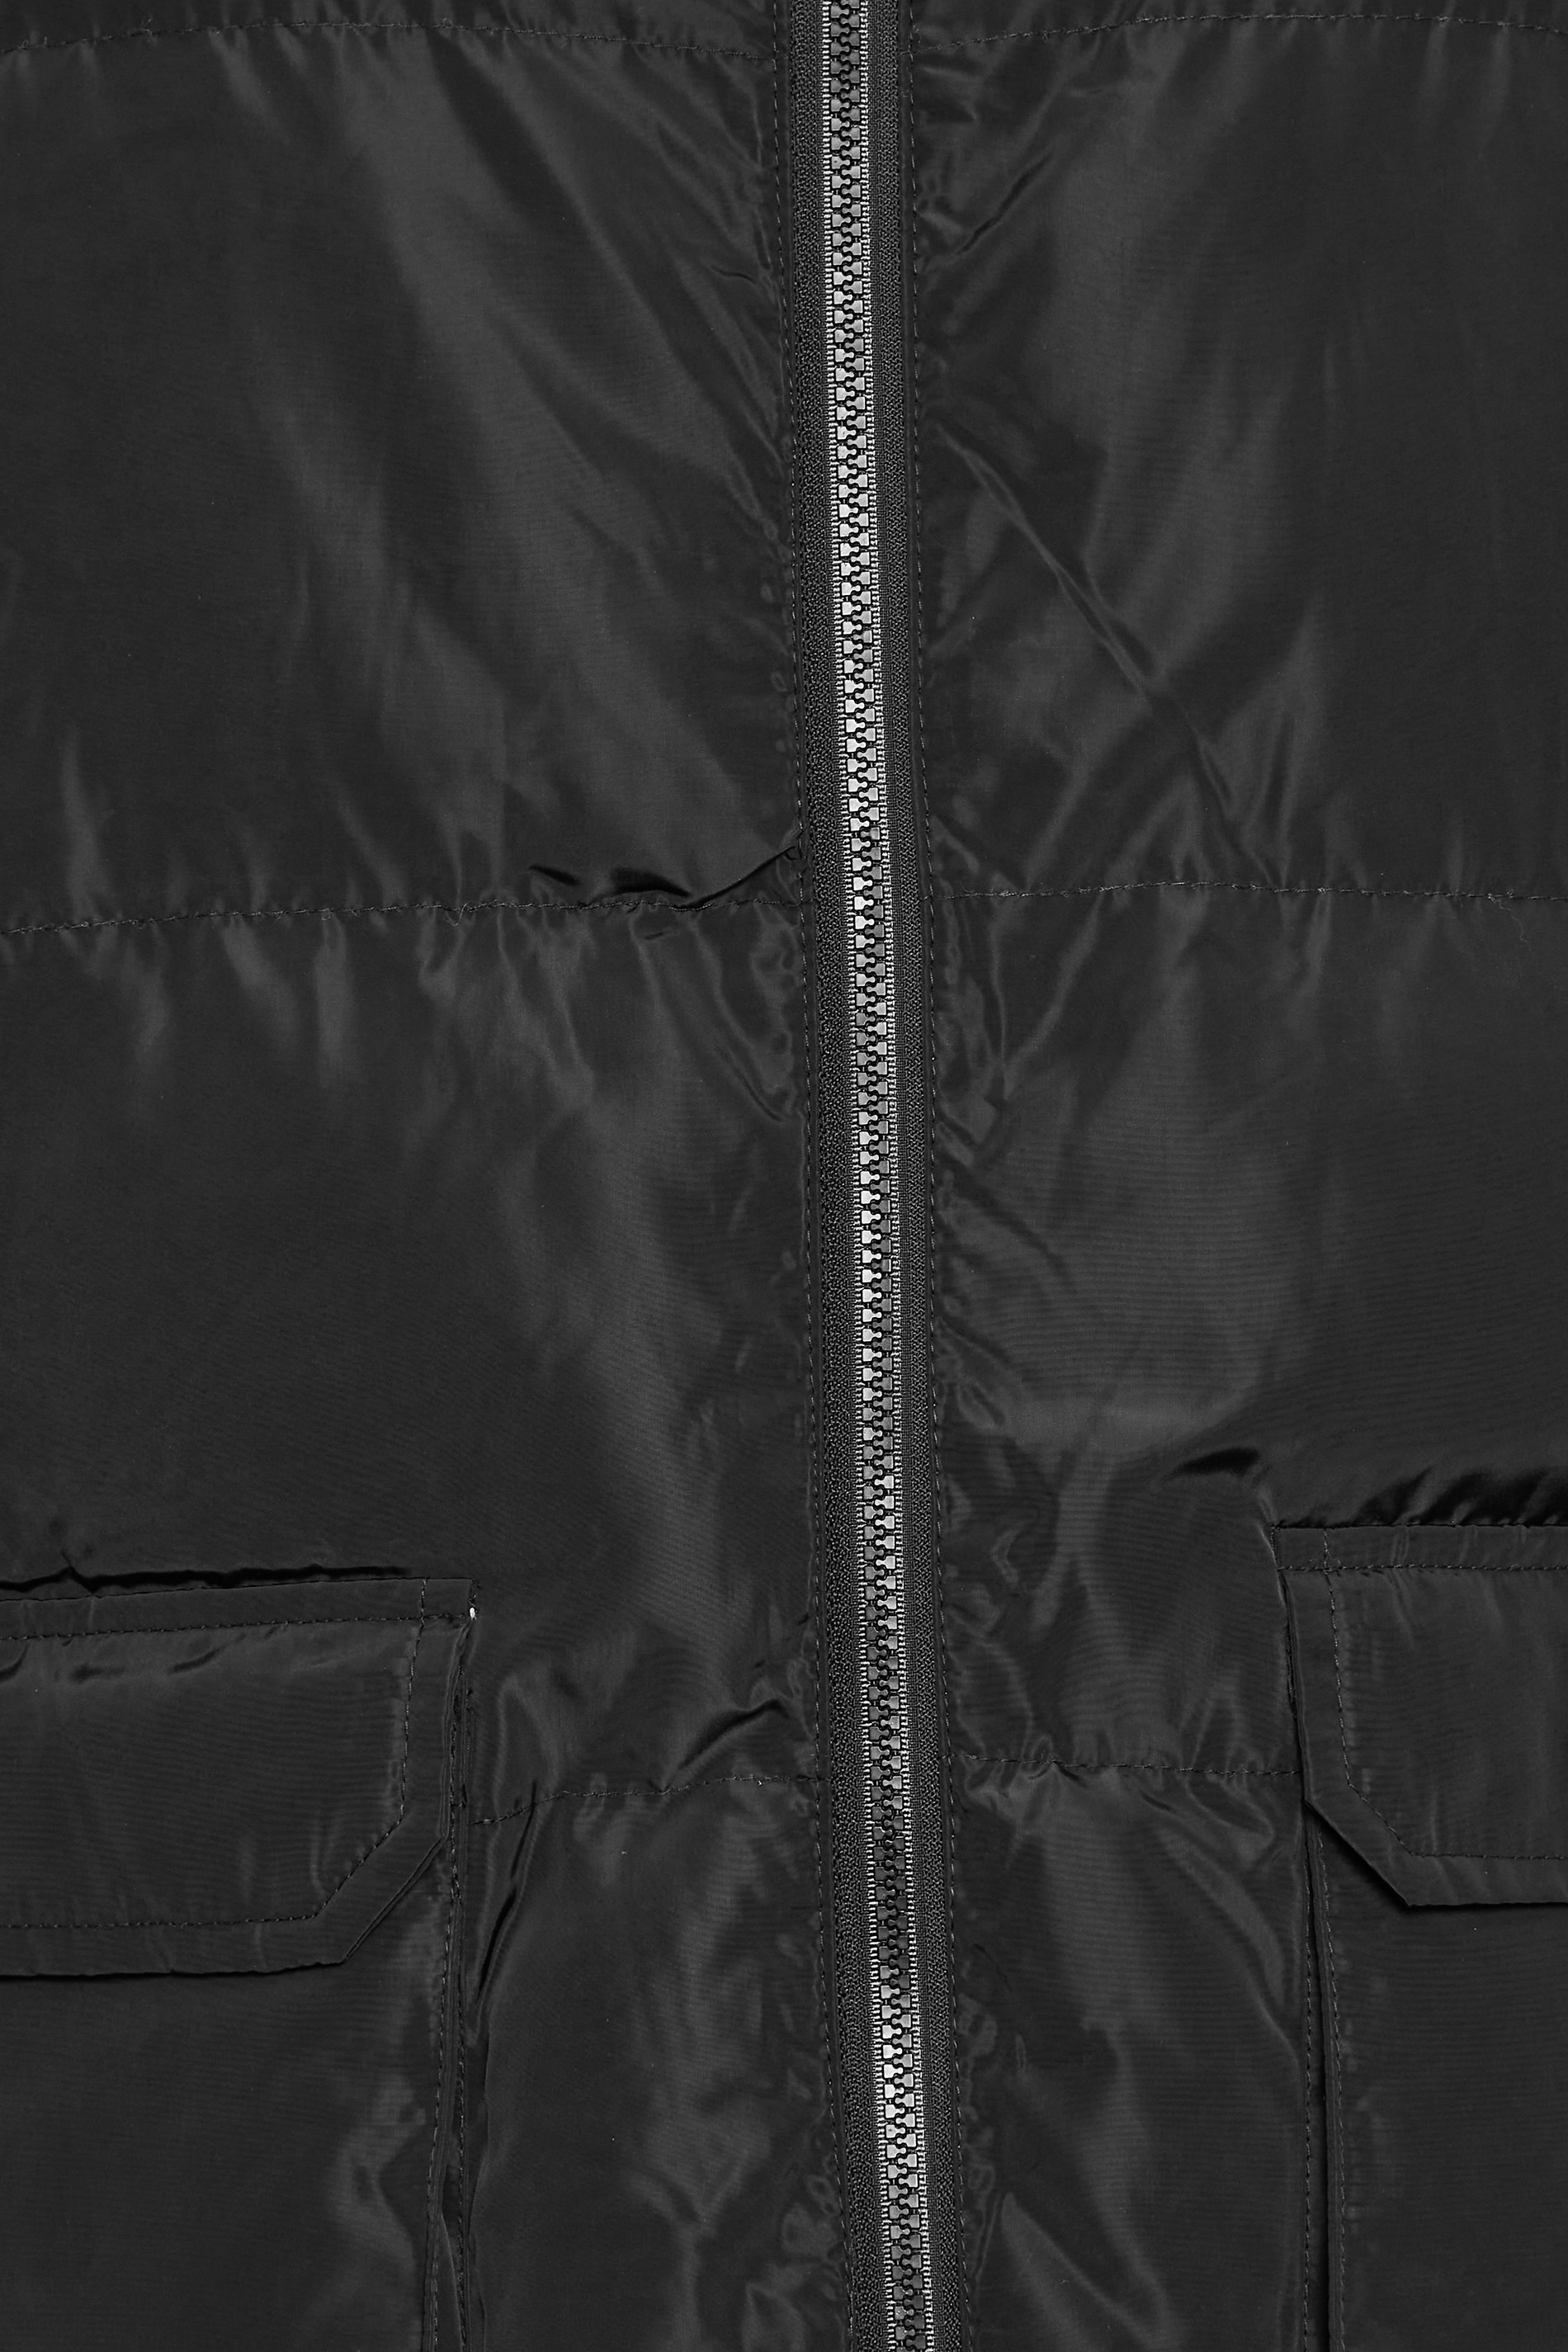 D555 Big & Tall Black Hooded Parka Coat | BadRhino 3